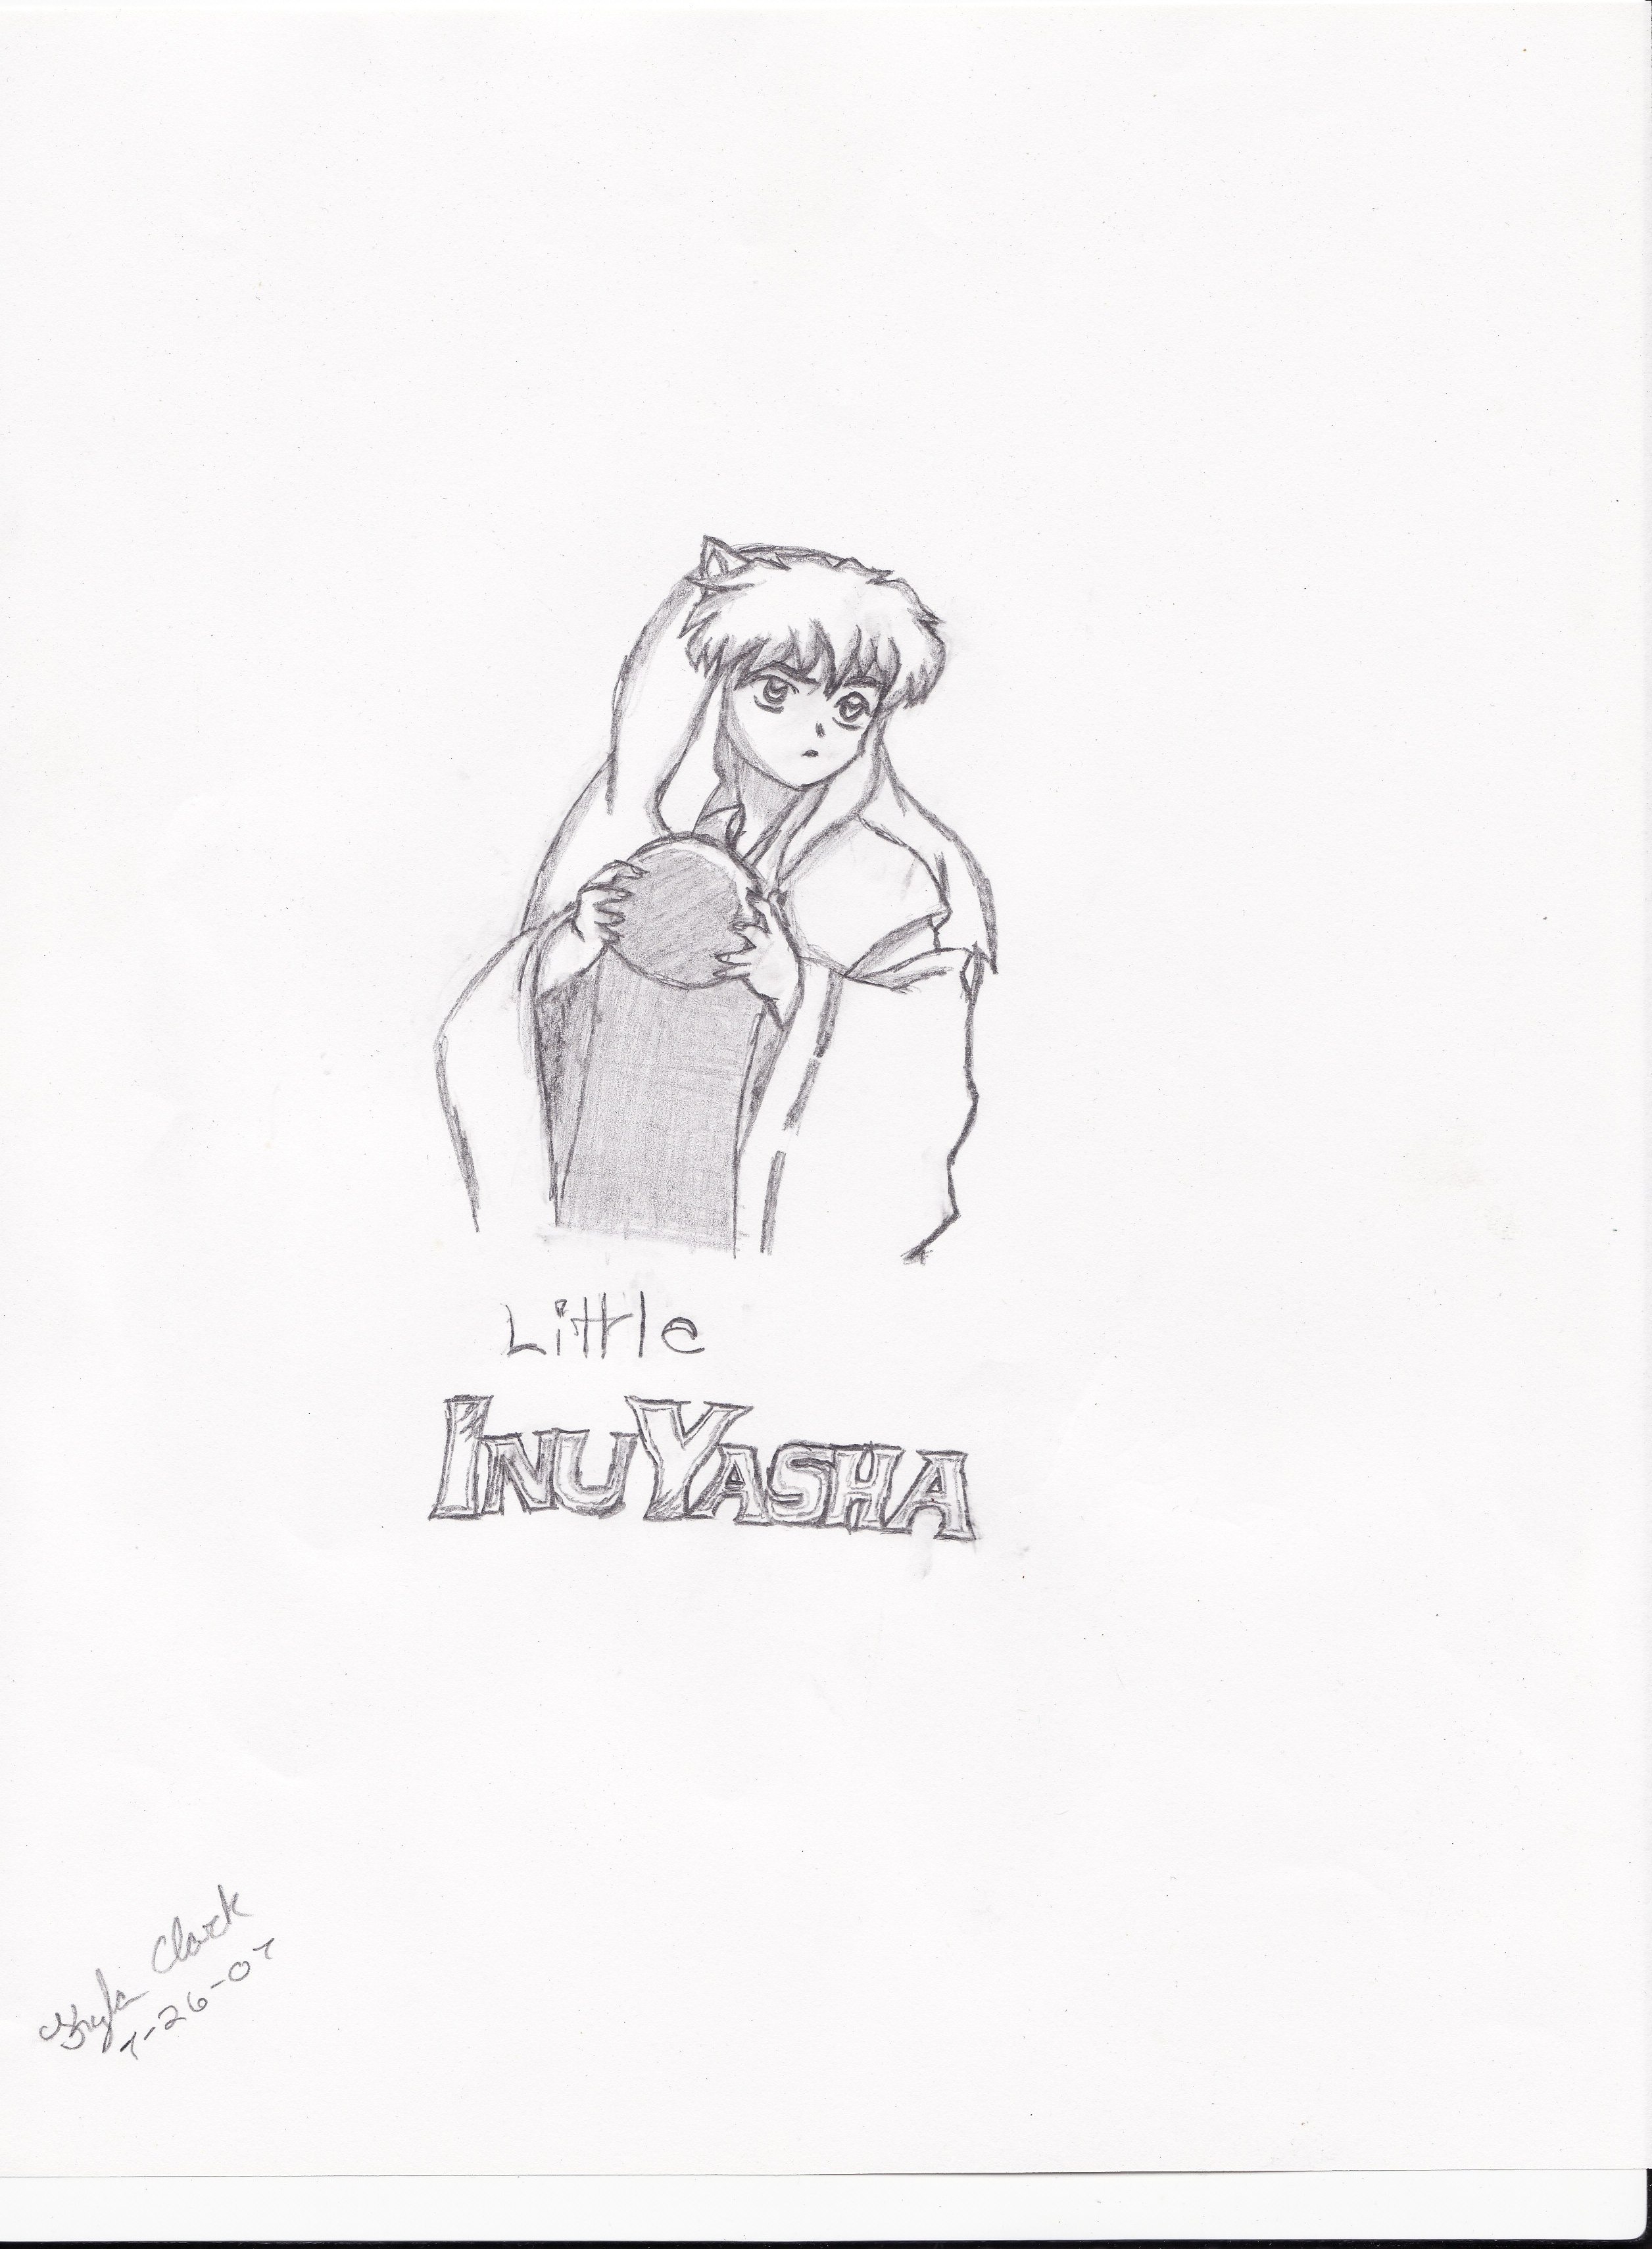 Little Inuyasha by kylaVegeta